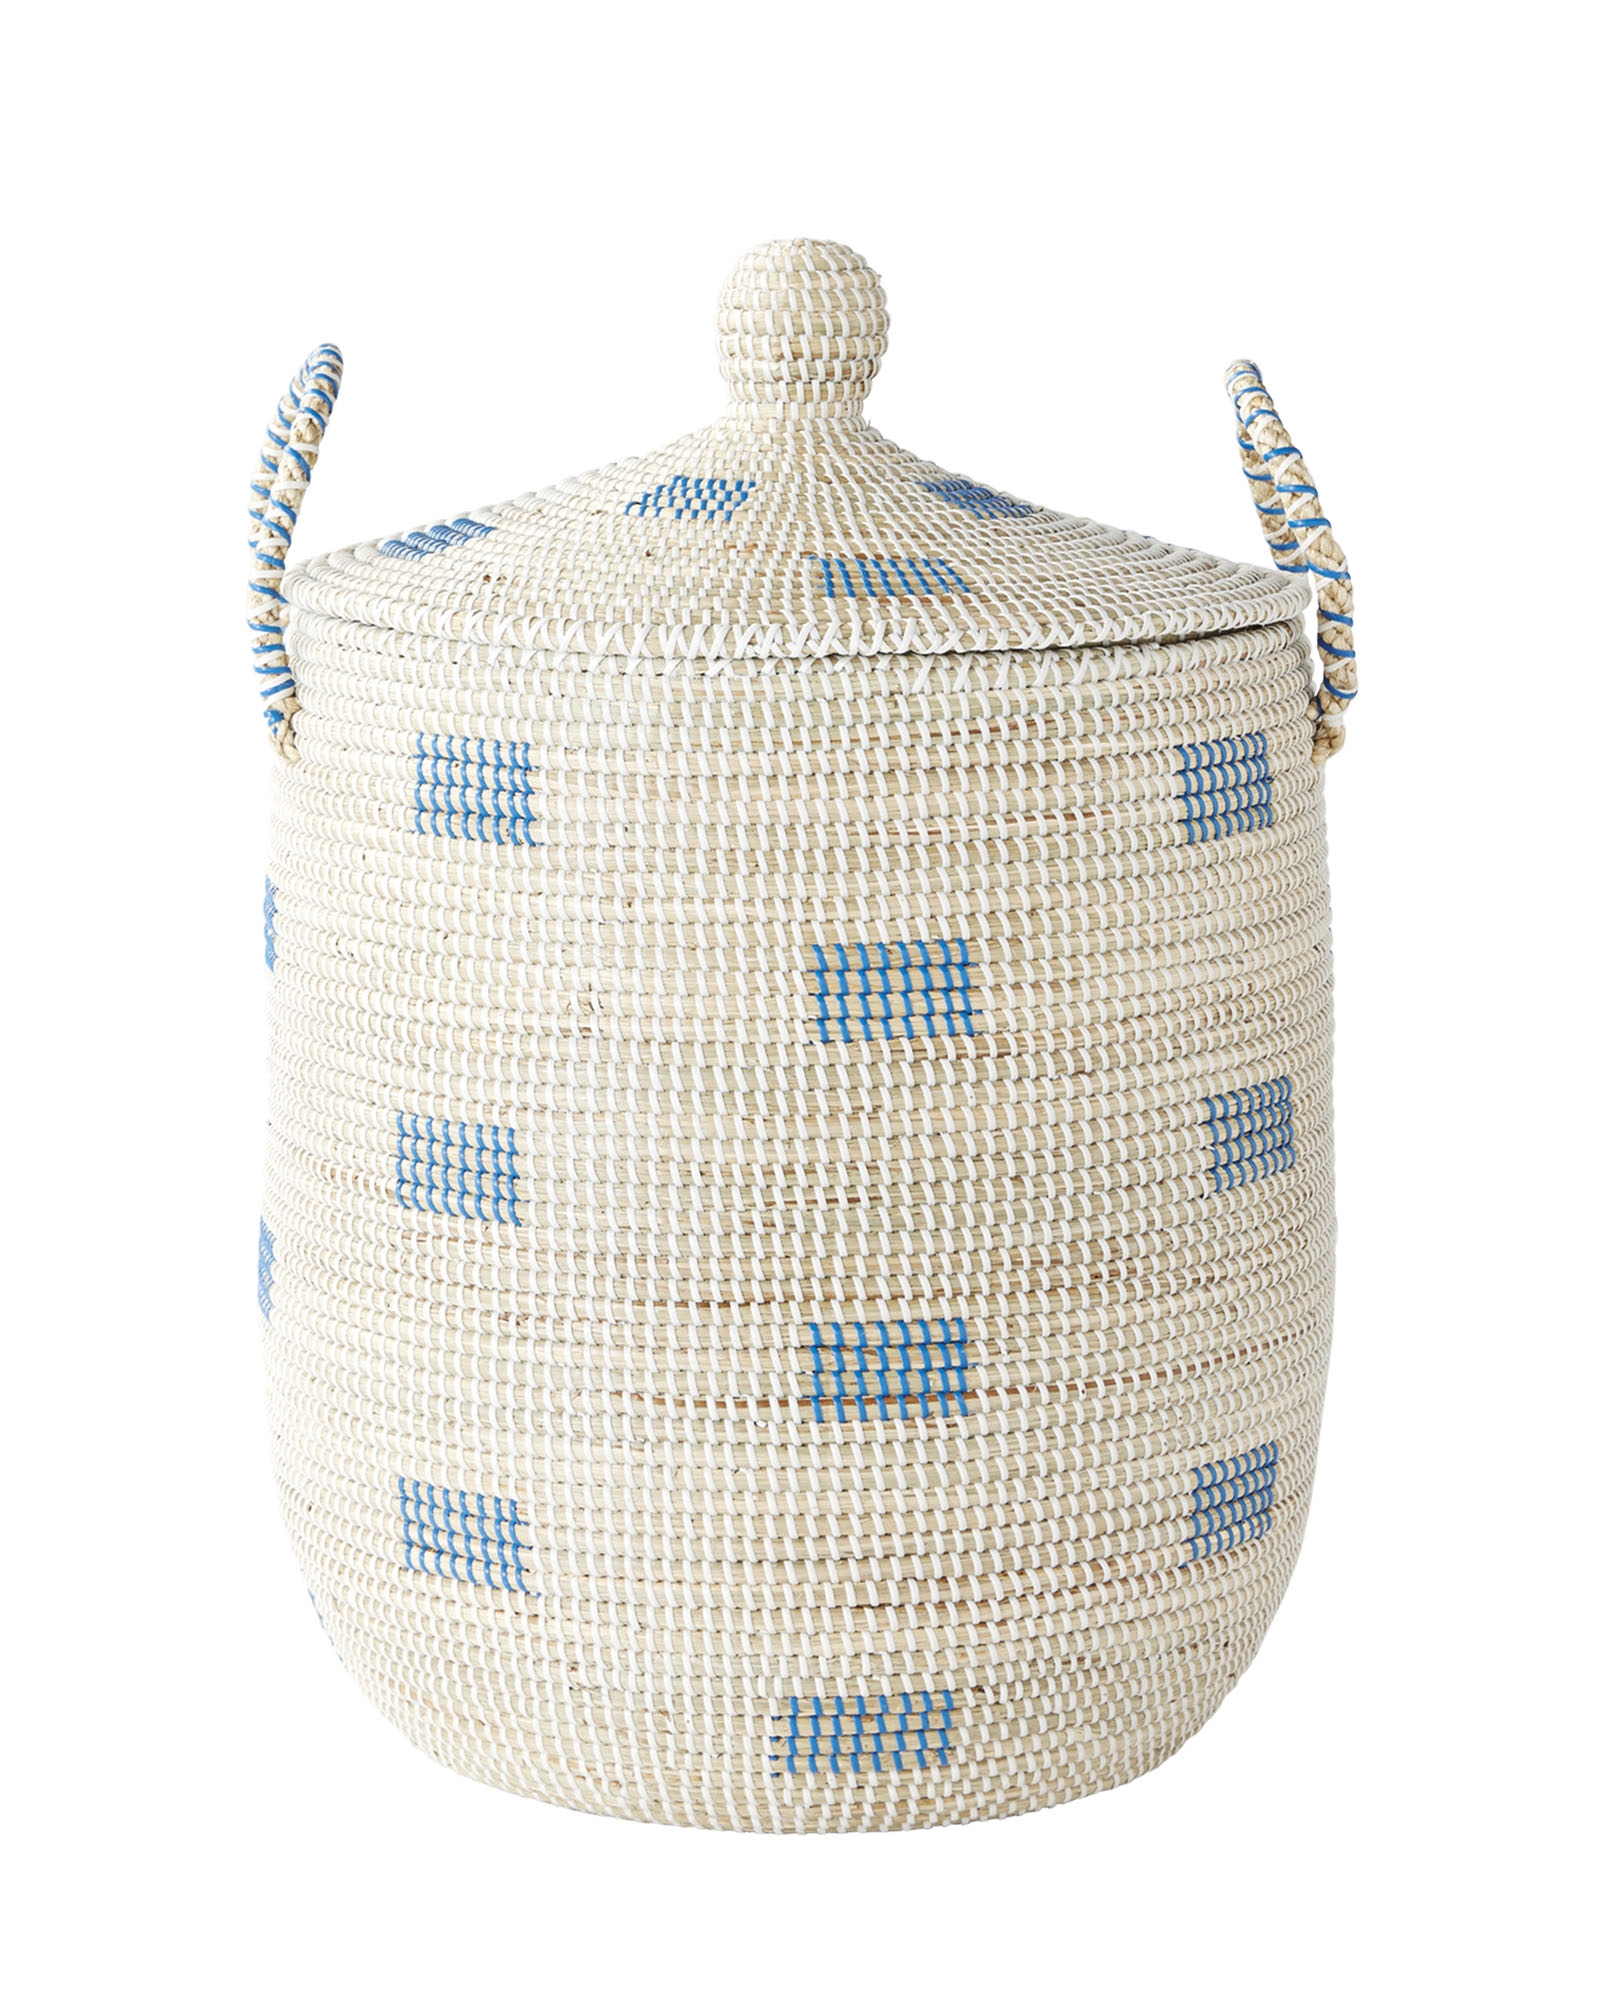 Striped La Jolla Basket - Blue - Medium - Image 0